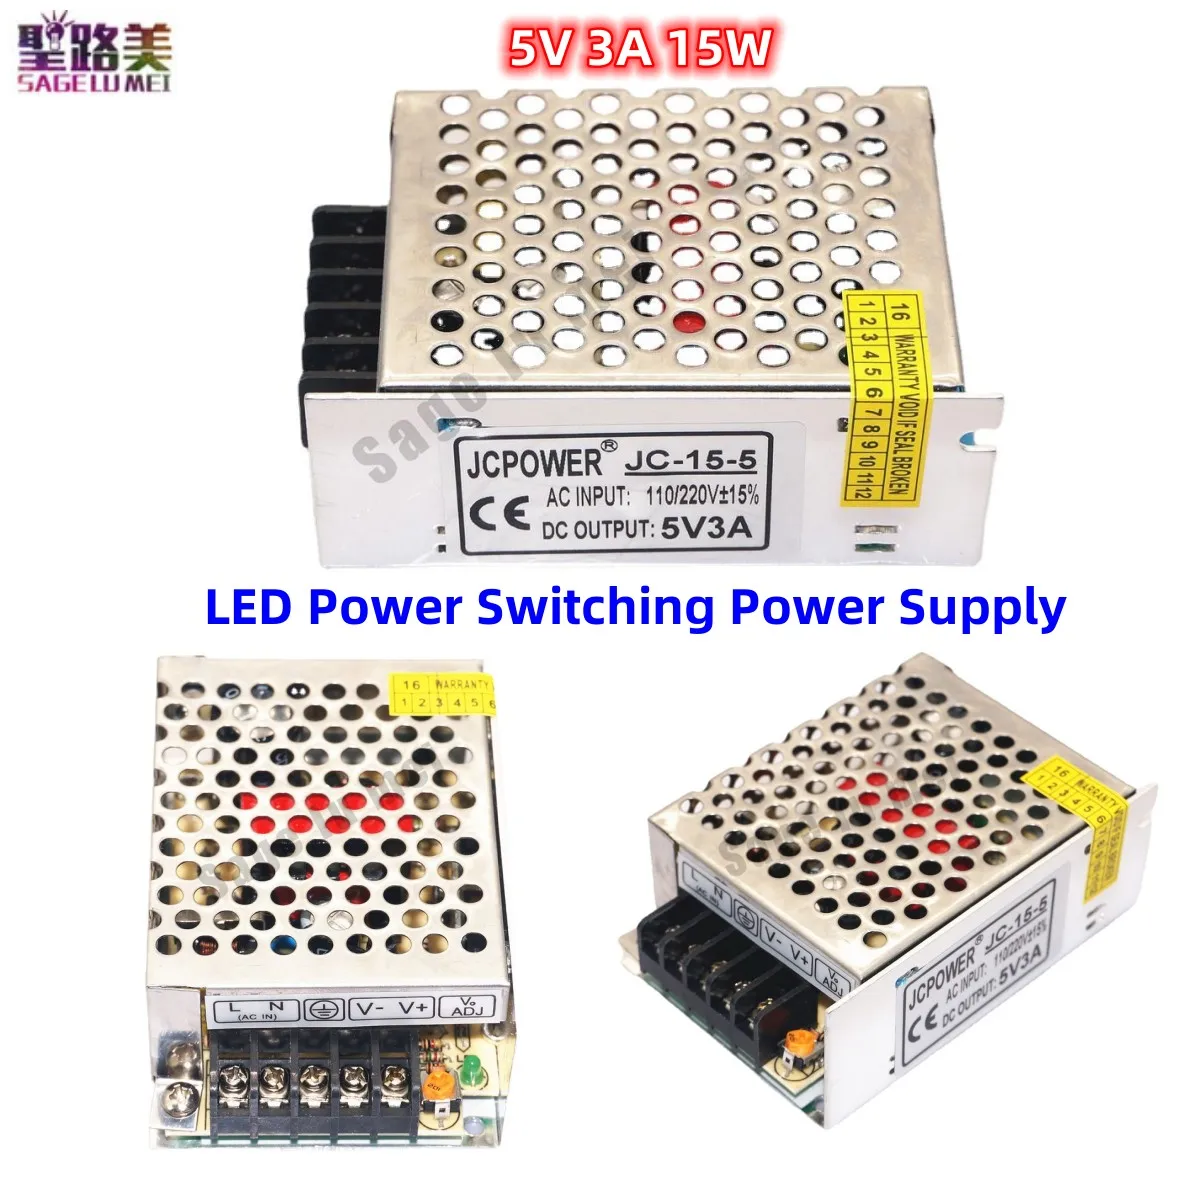 

1PCS 5V 3A 15W LED Power Switching Power Supply Adapter Lighting Transformer Input AC100V-240V Universal Regulated LED Driver